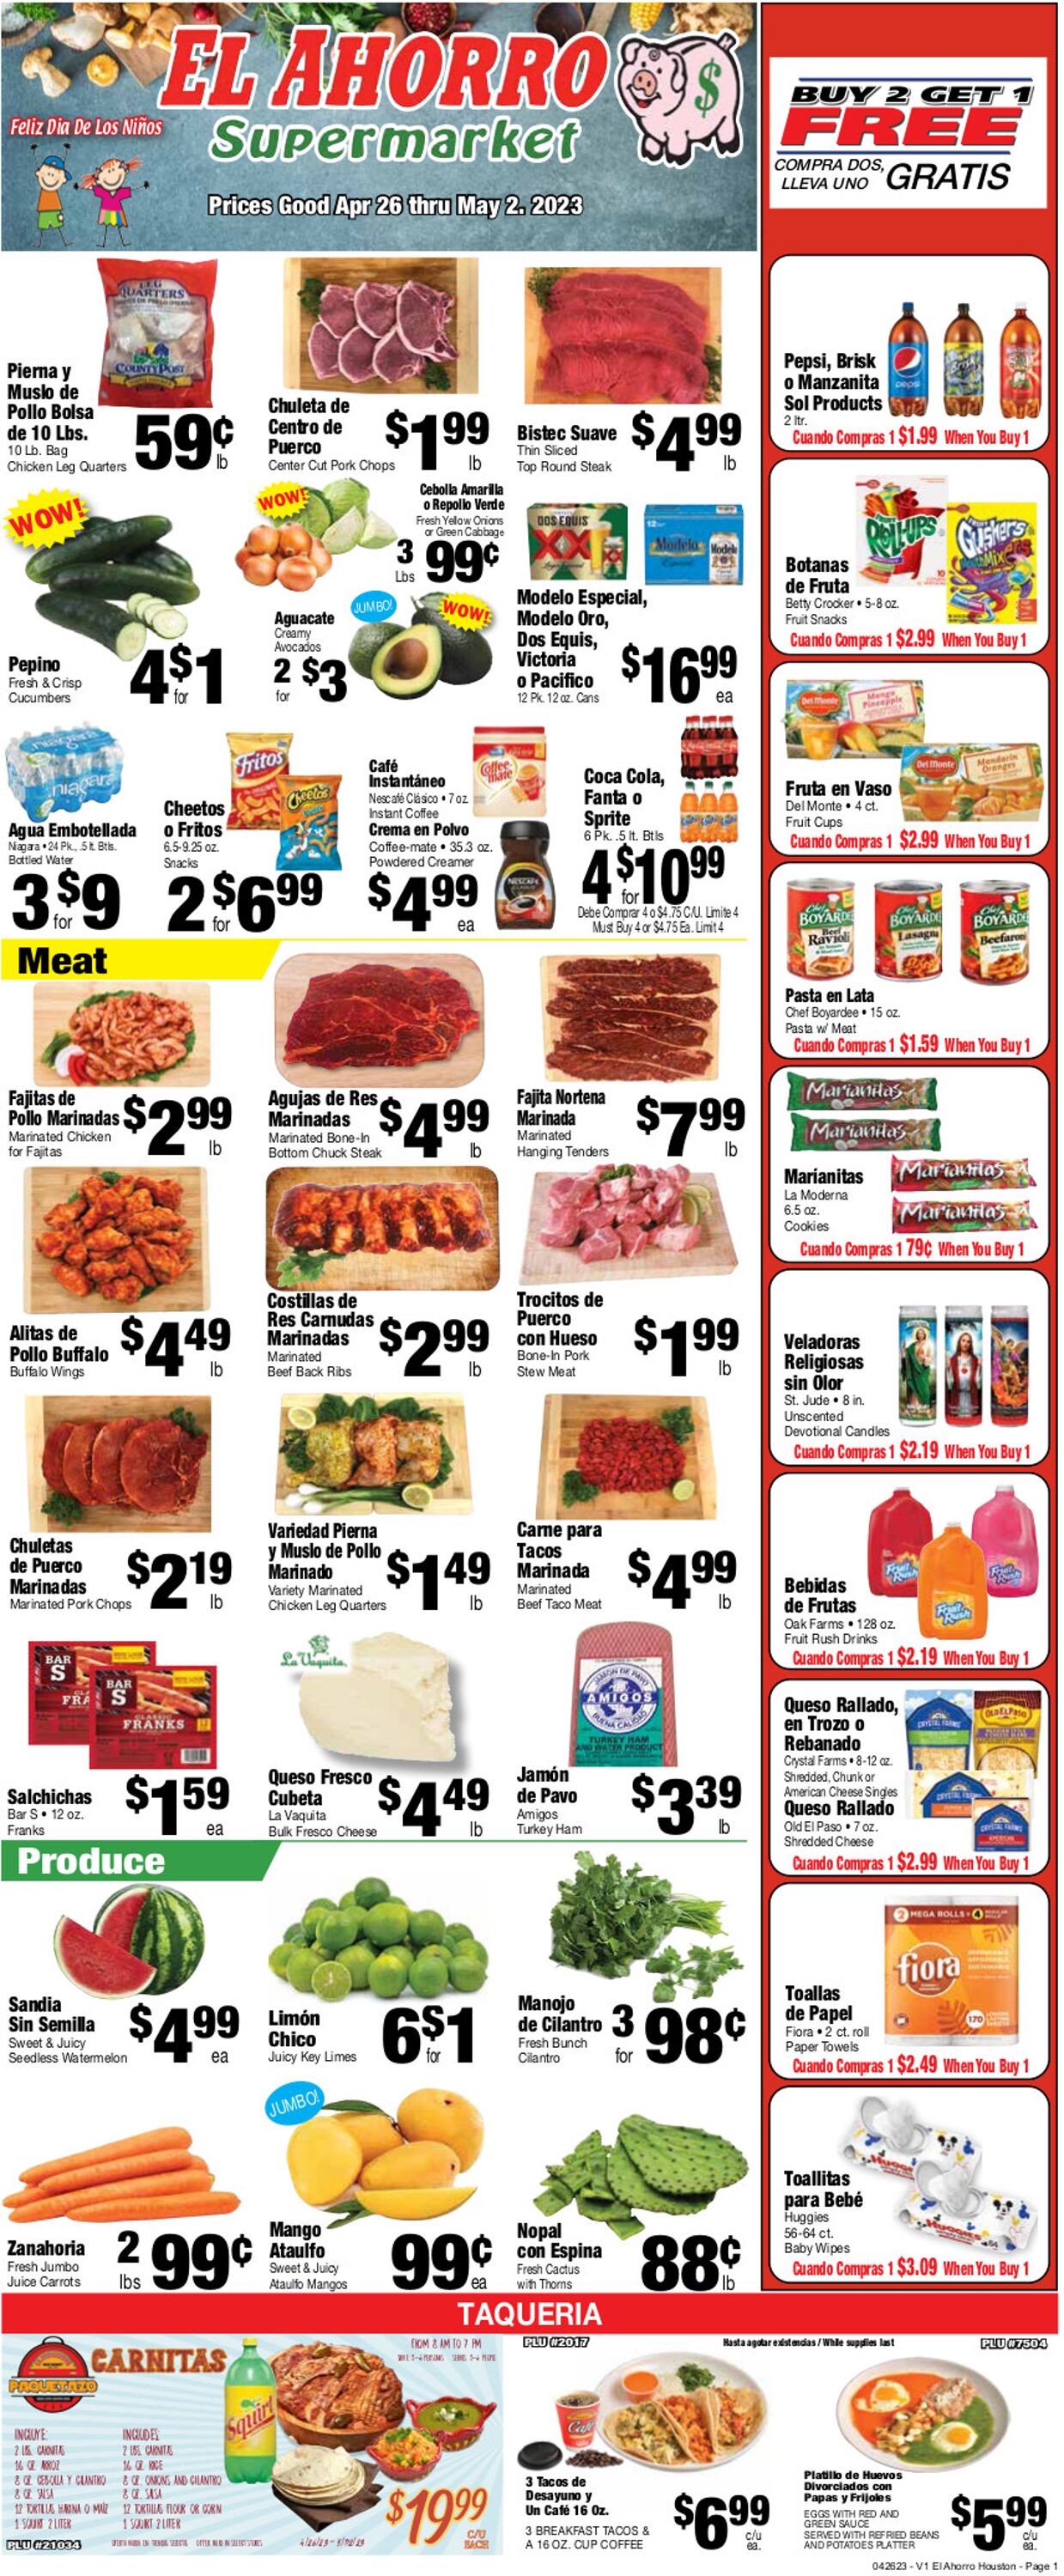 Catalogue El Ahorro Supermarket from 04/26/2023